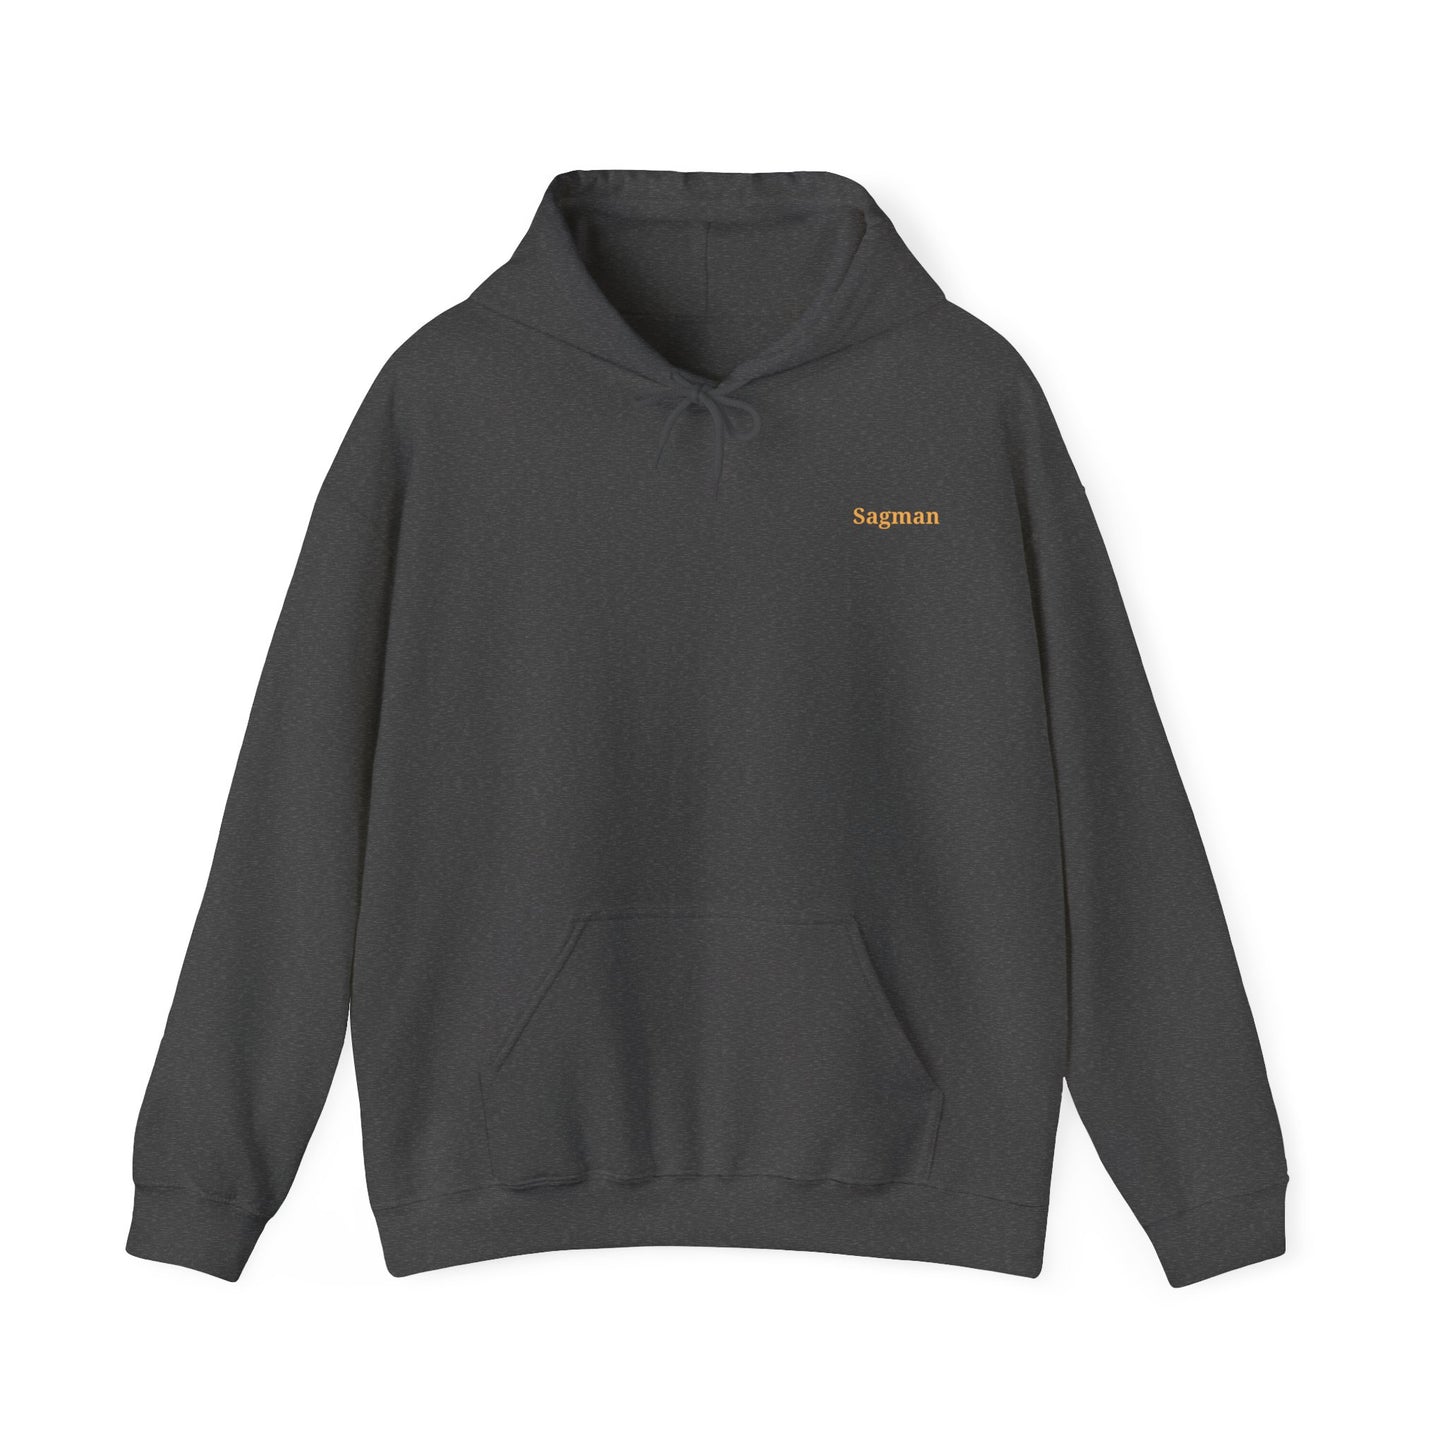 Snow Leopard Moon, Unisex Heavy Blend™ Hooded Sweatshirt, AI Assisted Design